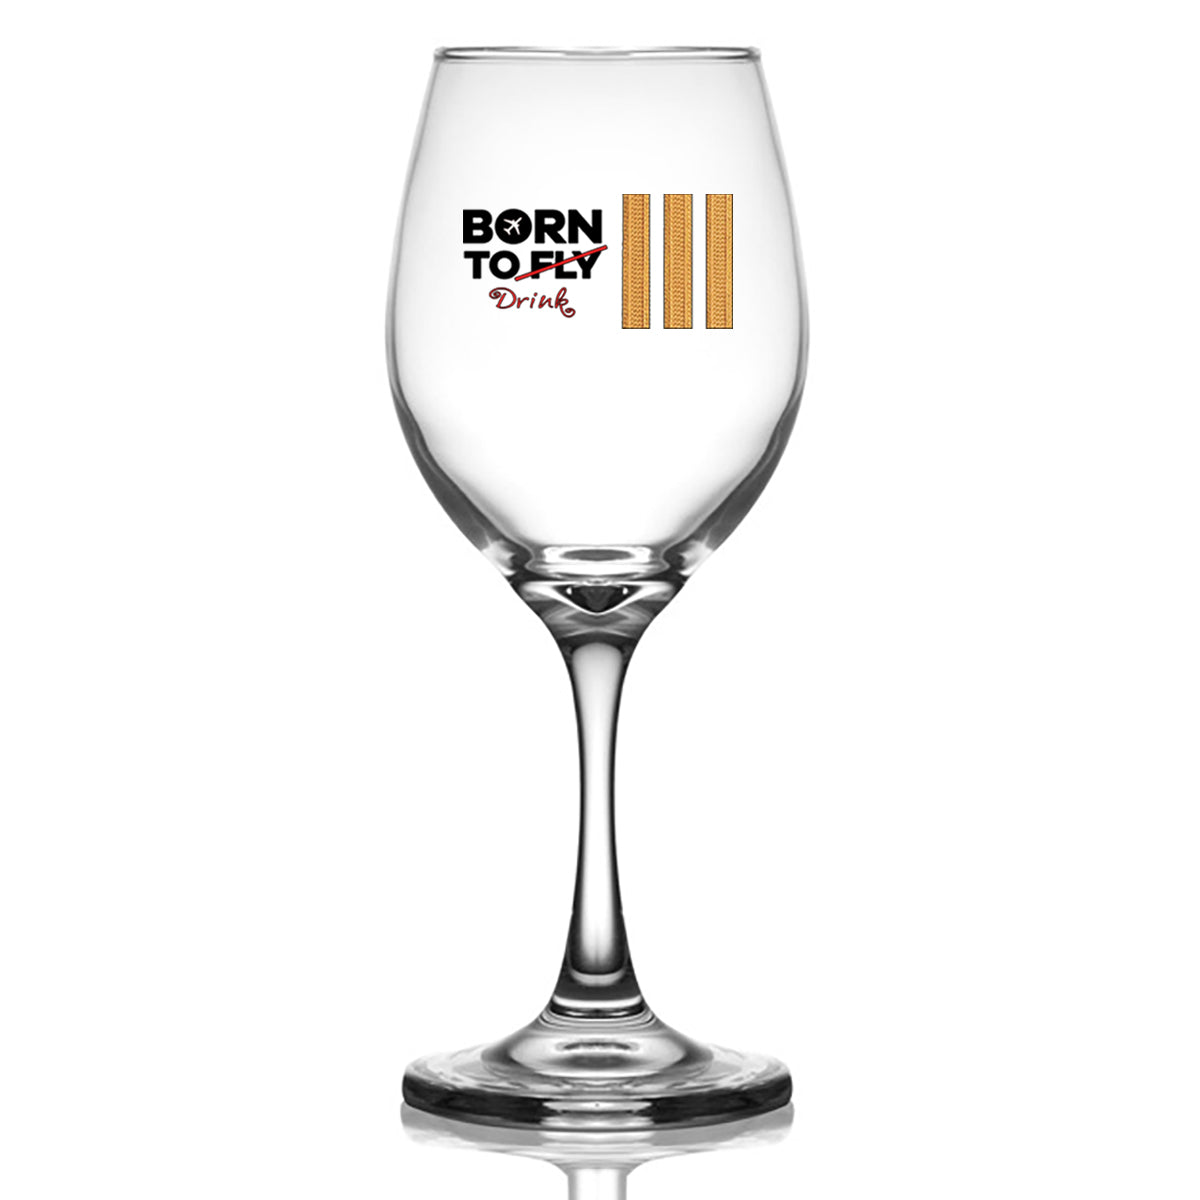 Born To Drink & 3 Lines Designed Wine Glasses